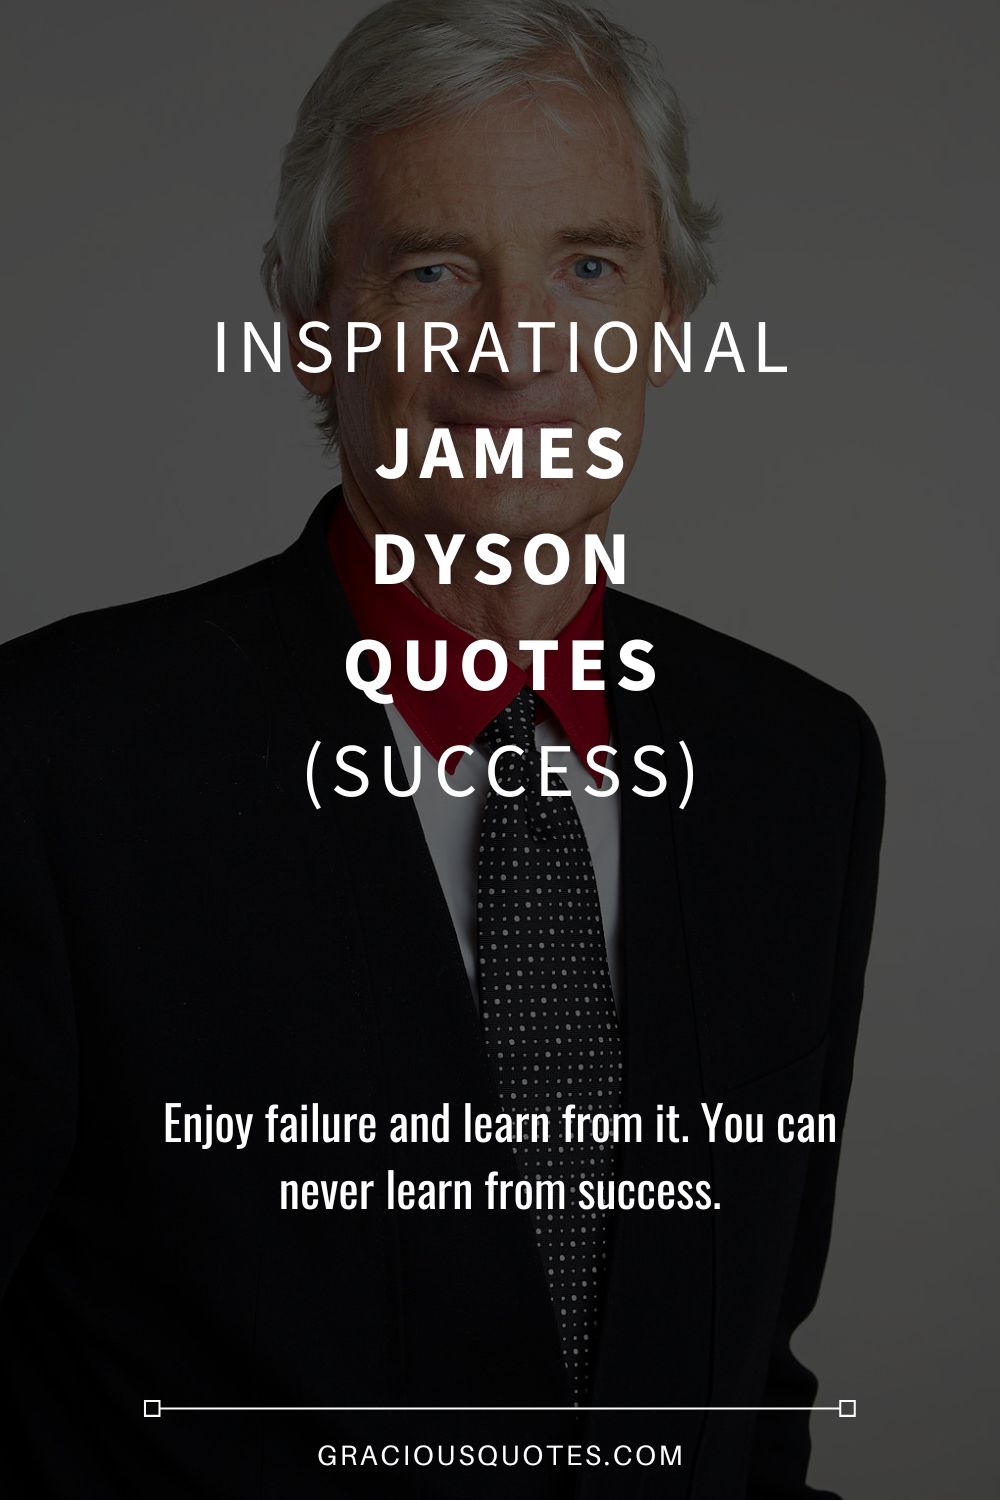 Inspirational James Dyson Quotes (SUCCESS) - Gracious Quotes